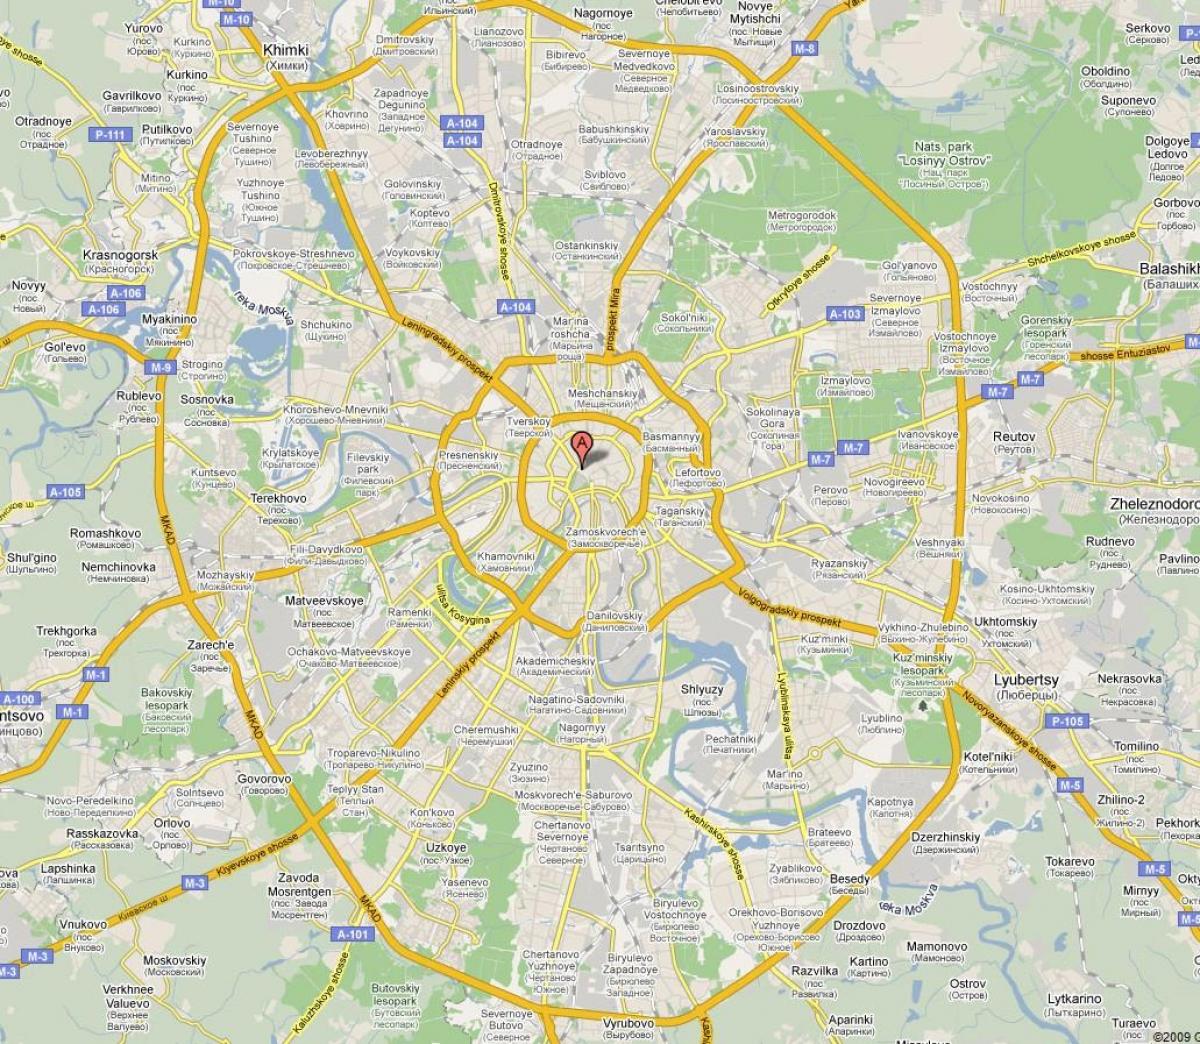 Moskva புறநகர் வரைபடம்